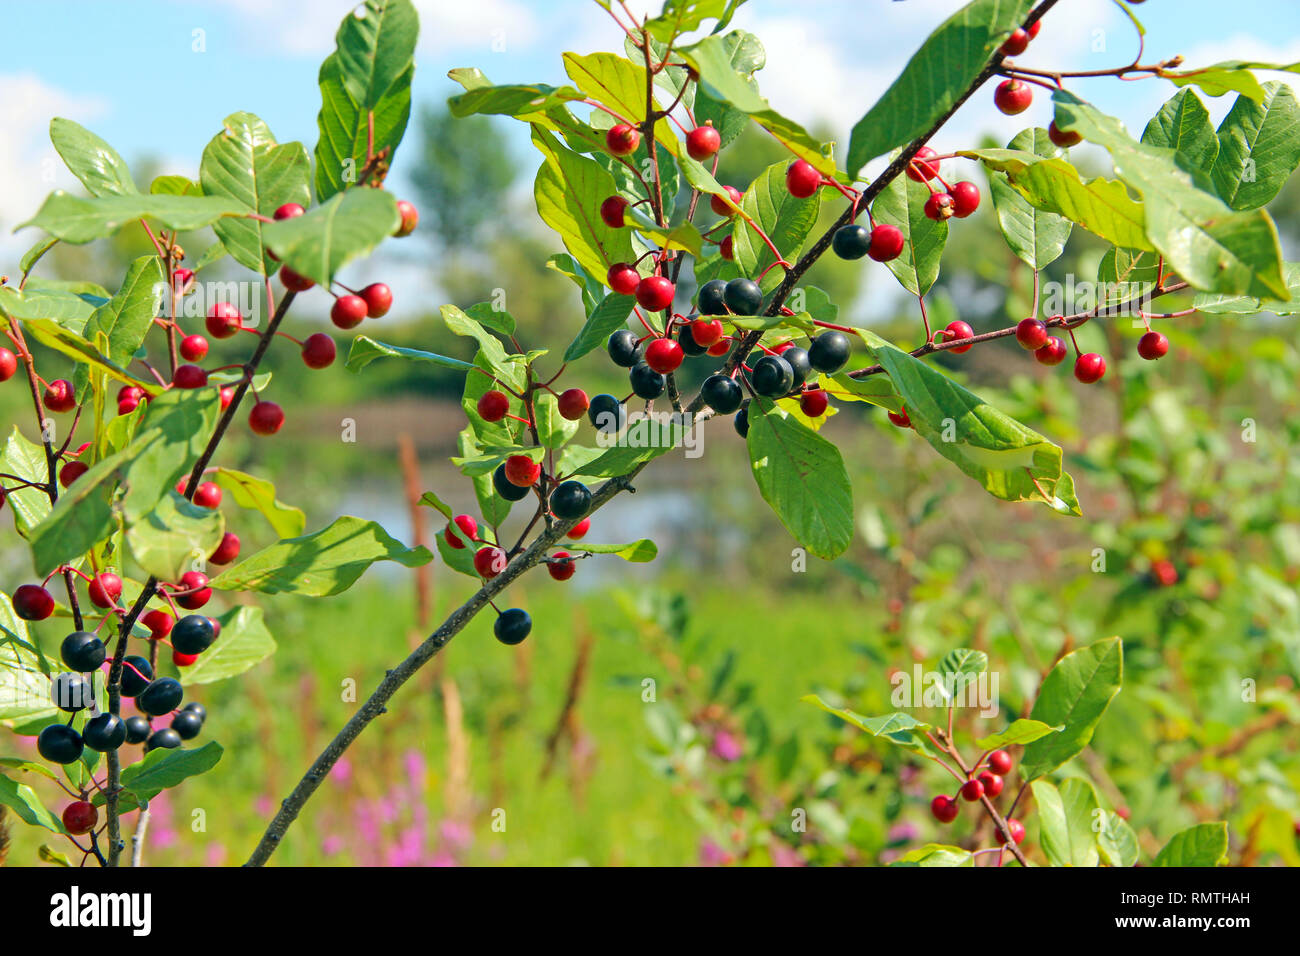 Branches of Frangula alnus with black and red berries. Fruits of Frangula alnus Stock Photo